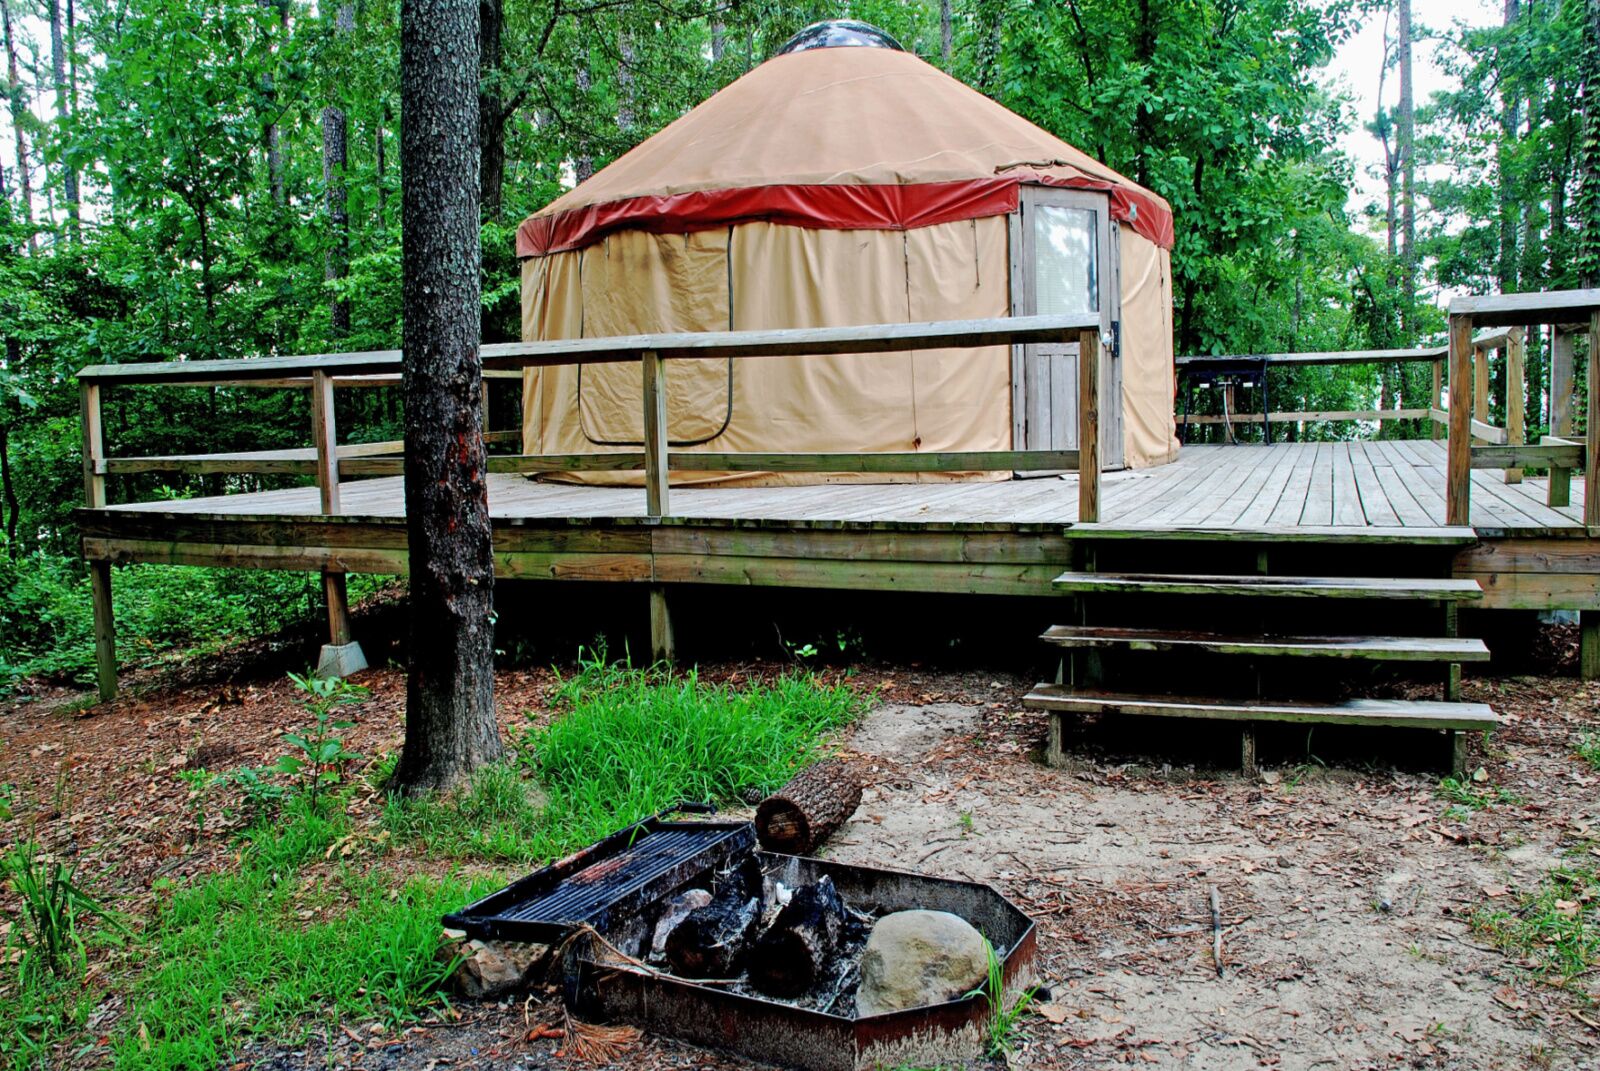 arkansas state park camping - yurt 